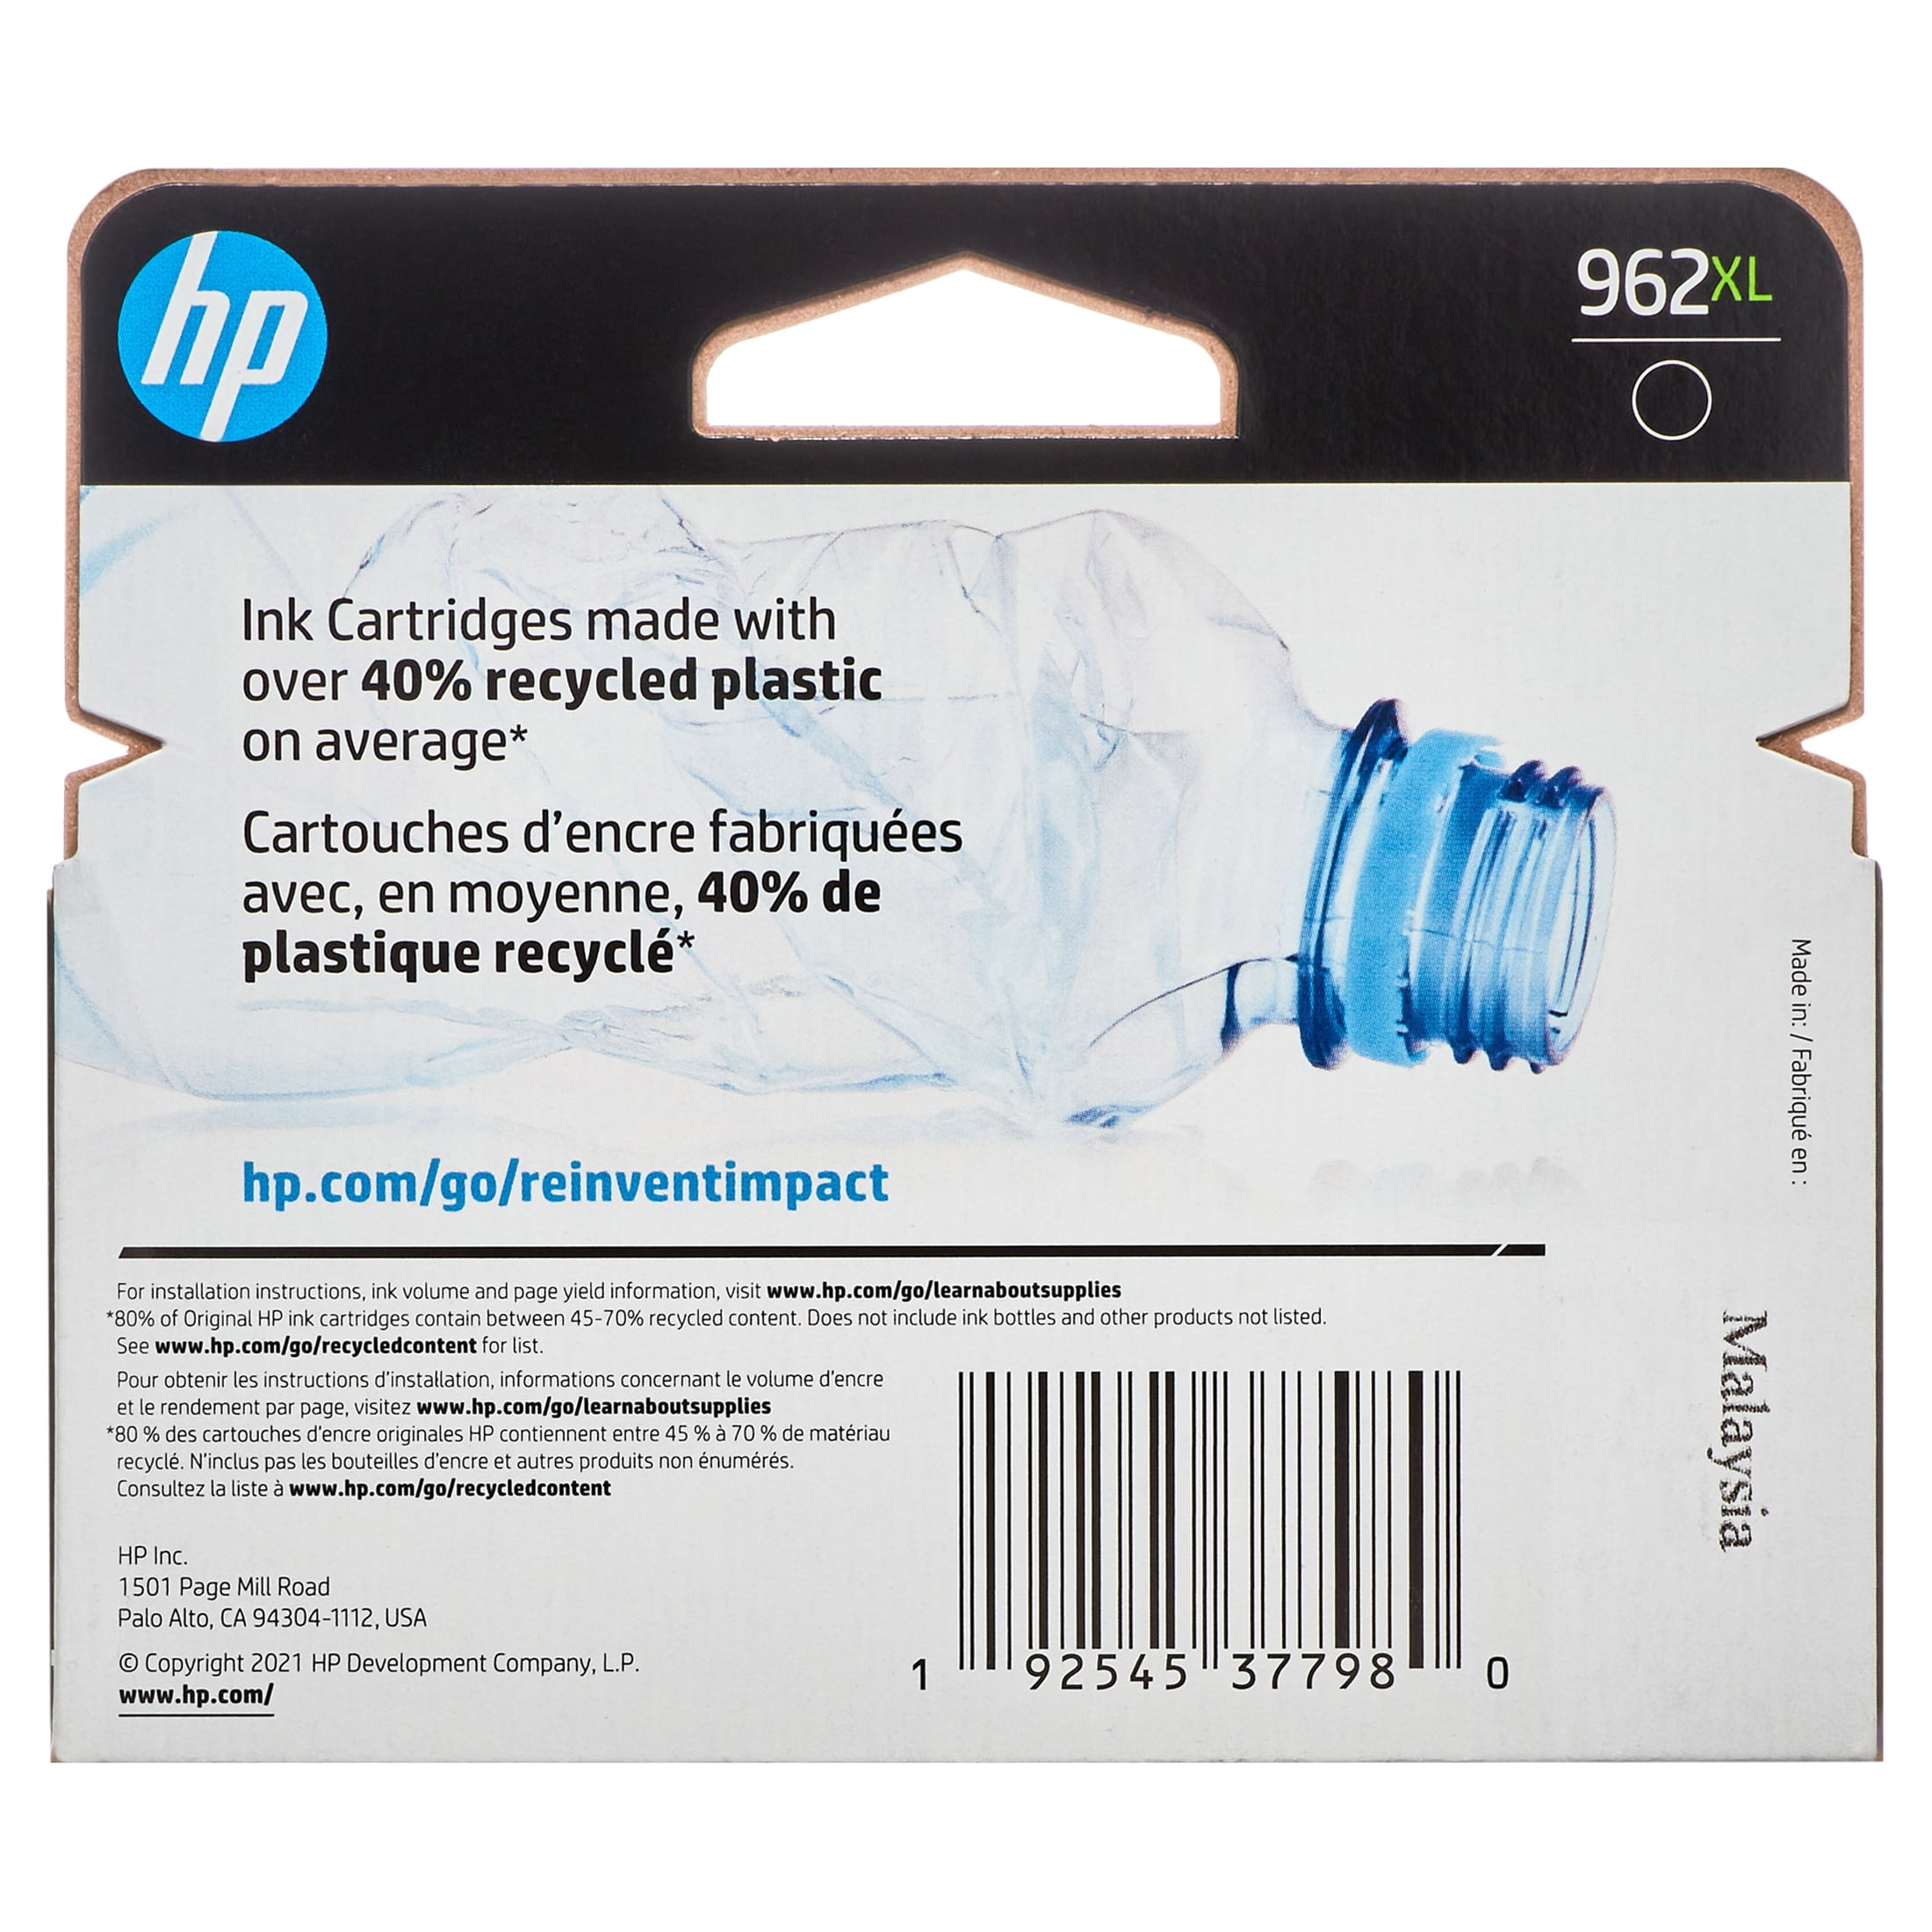 Compatible Ink Cartridge HP 963XL Magenta 23ml